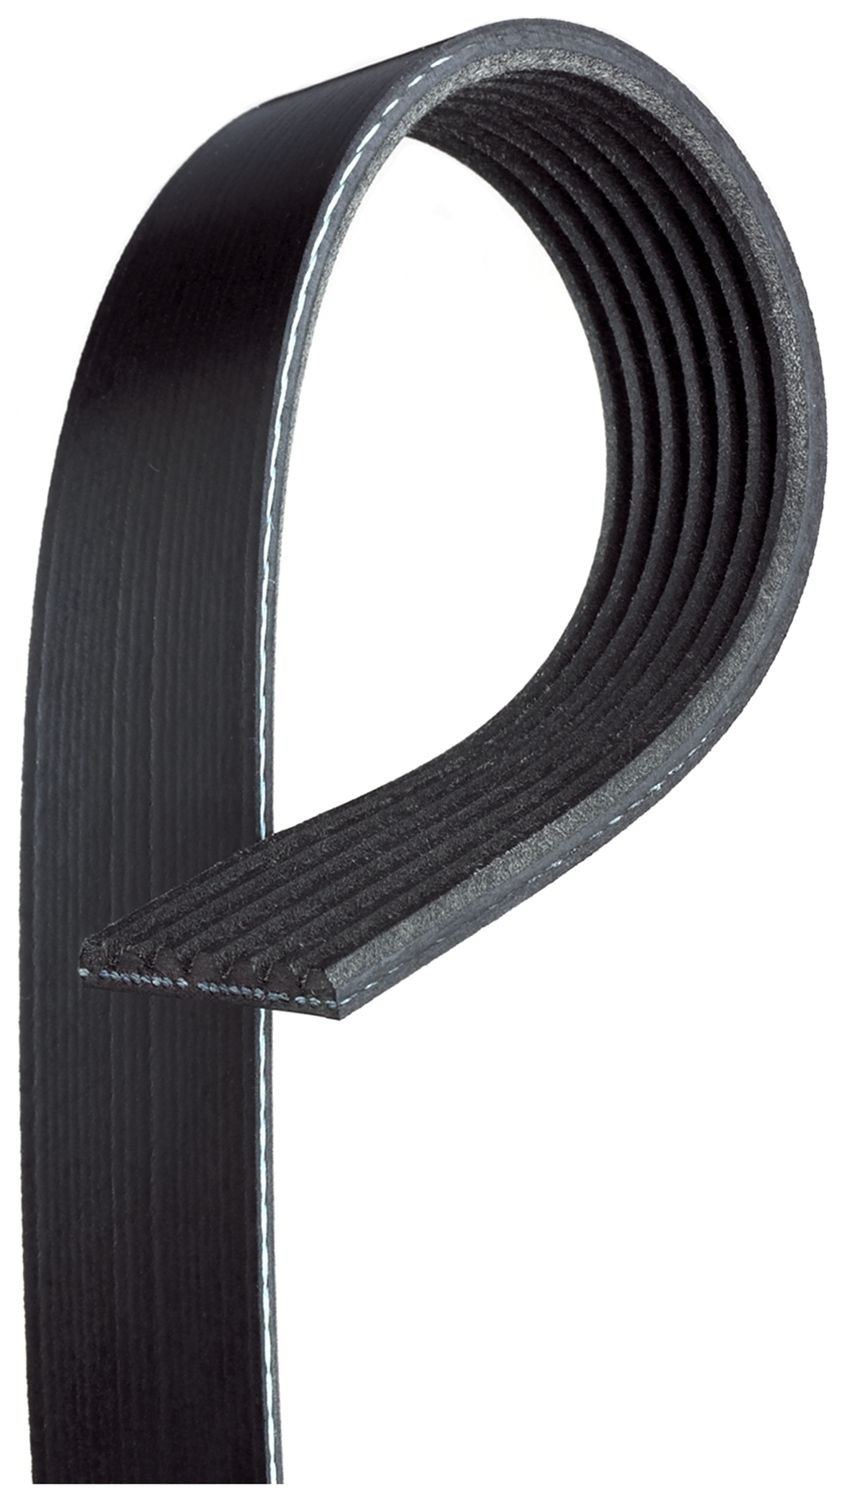 GATES 7PK2535 Serpentine belt 2535mm, 7, G-Force™ C12™ CVT Belt